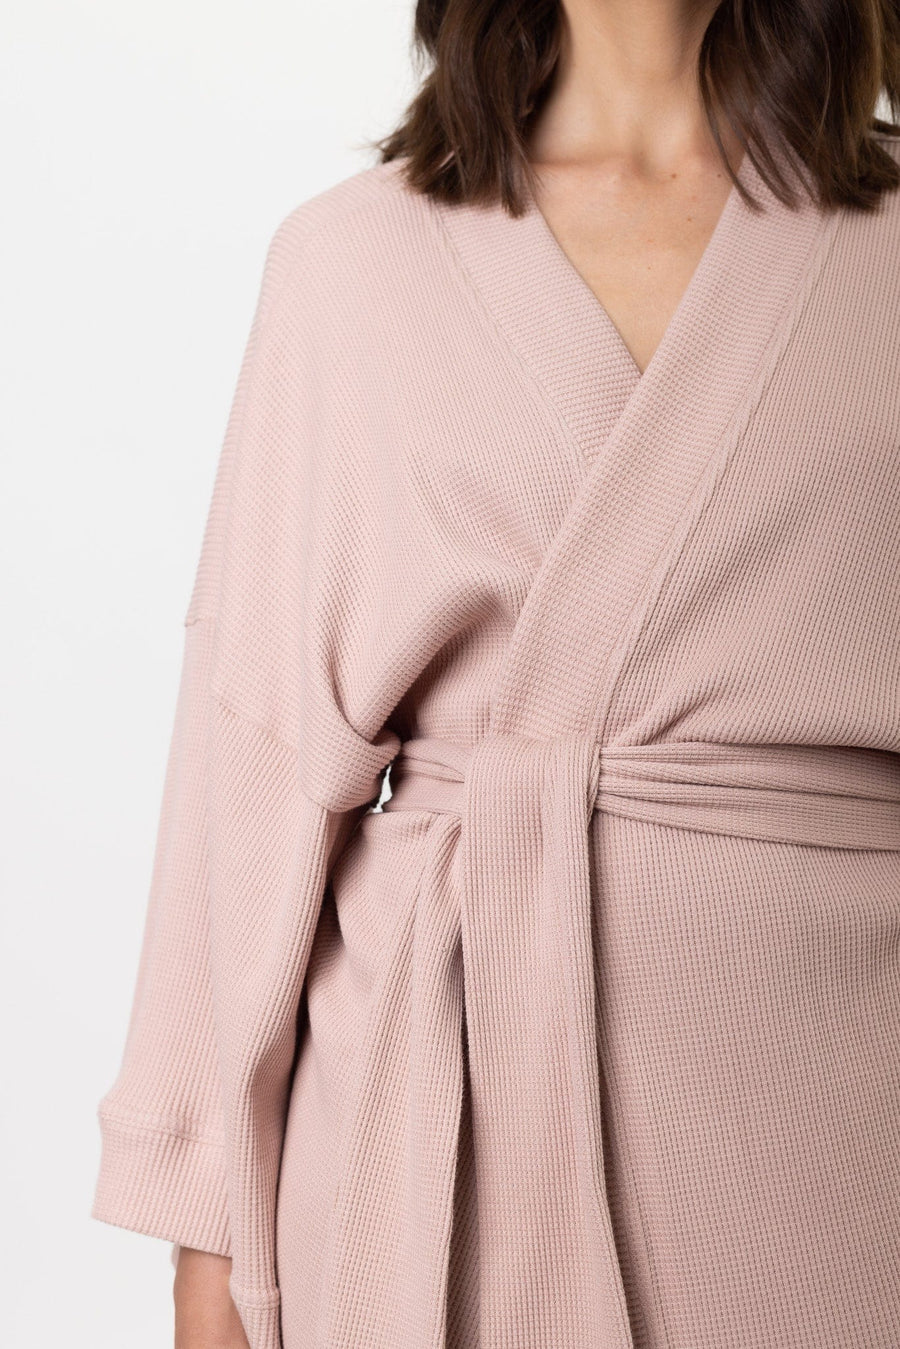 Belle Robe | Dusty Pink Belle Robe Robes Pajamas Australia Online | Reverie the Label  TOPS Belle Robe